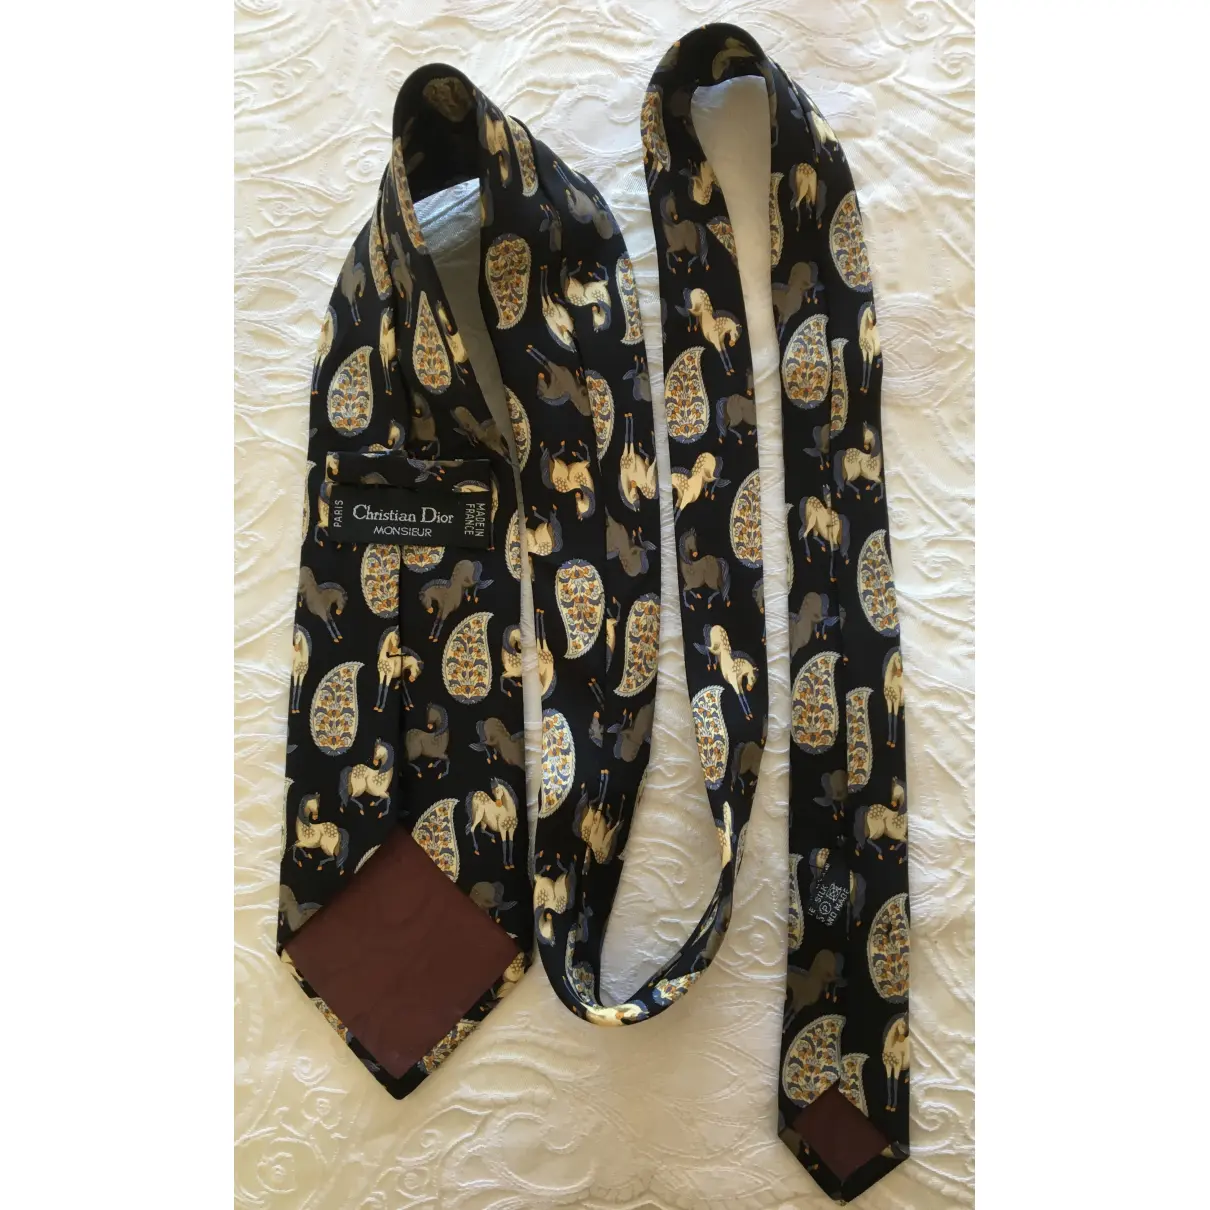 Buy Dior Homme Silk tie online - Vintage